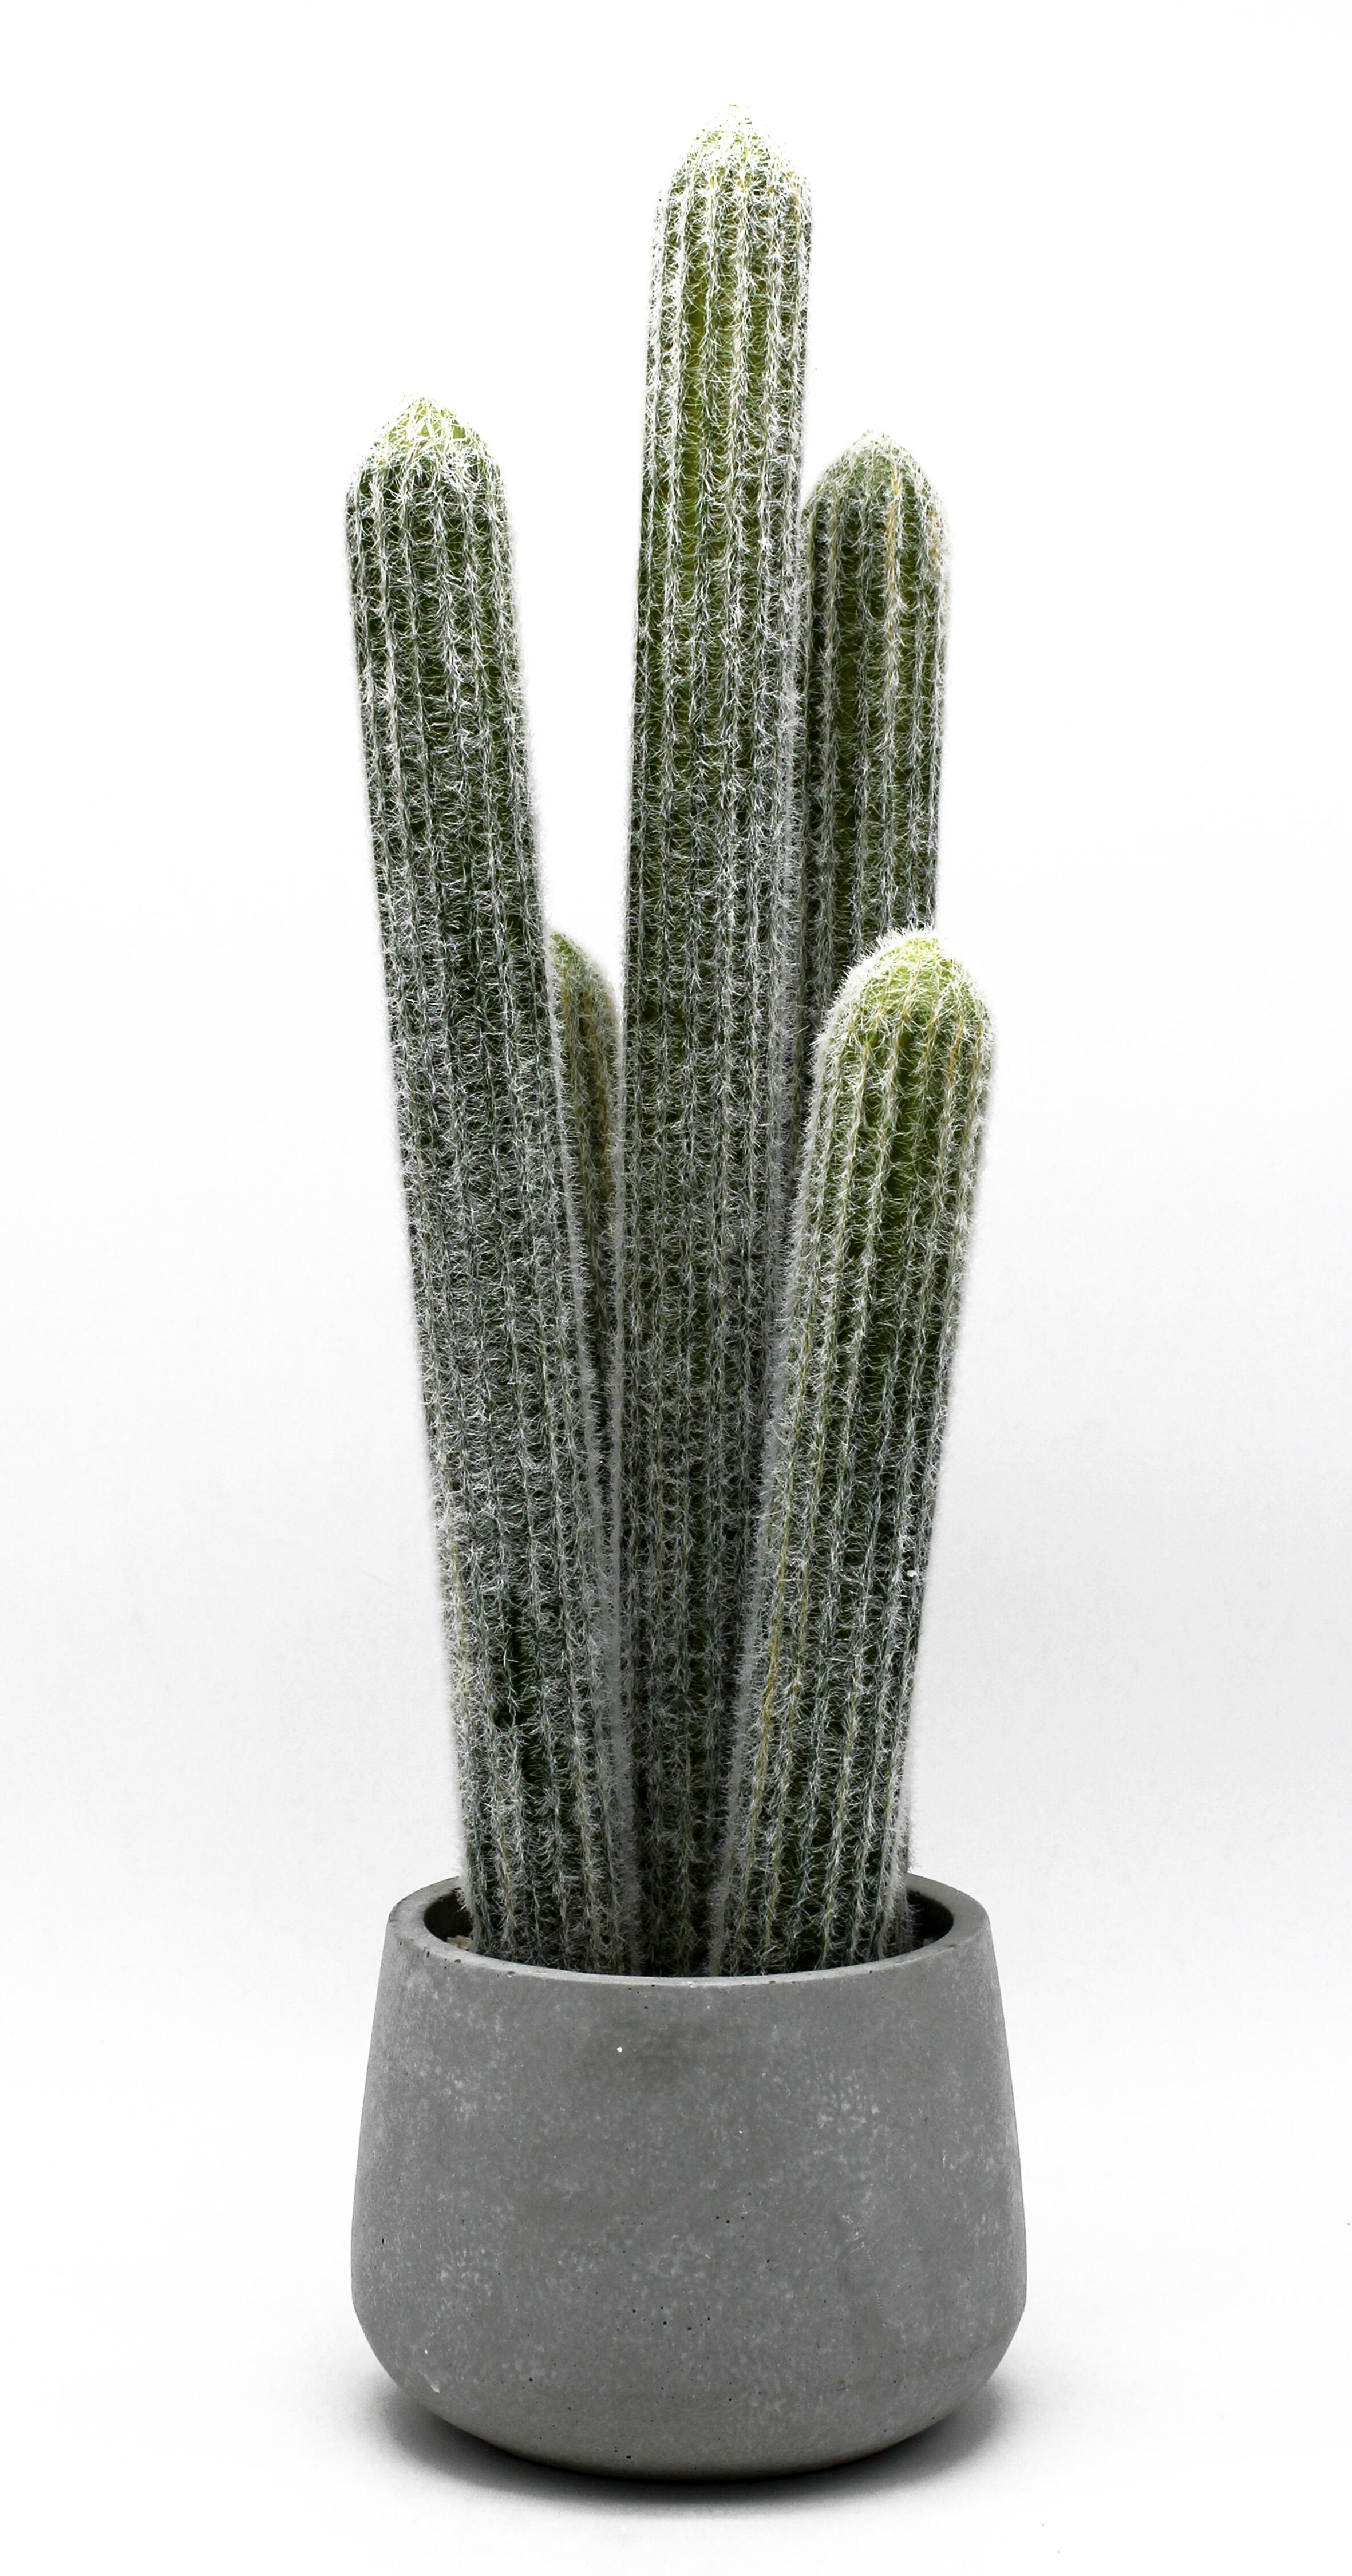 Planta artificial cactus de 56 cm de altura en maceta de 16.5 cm